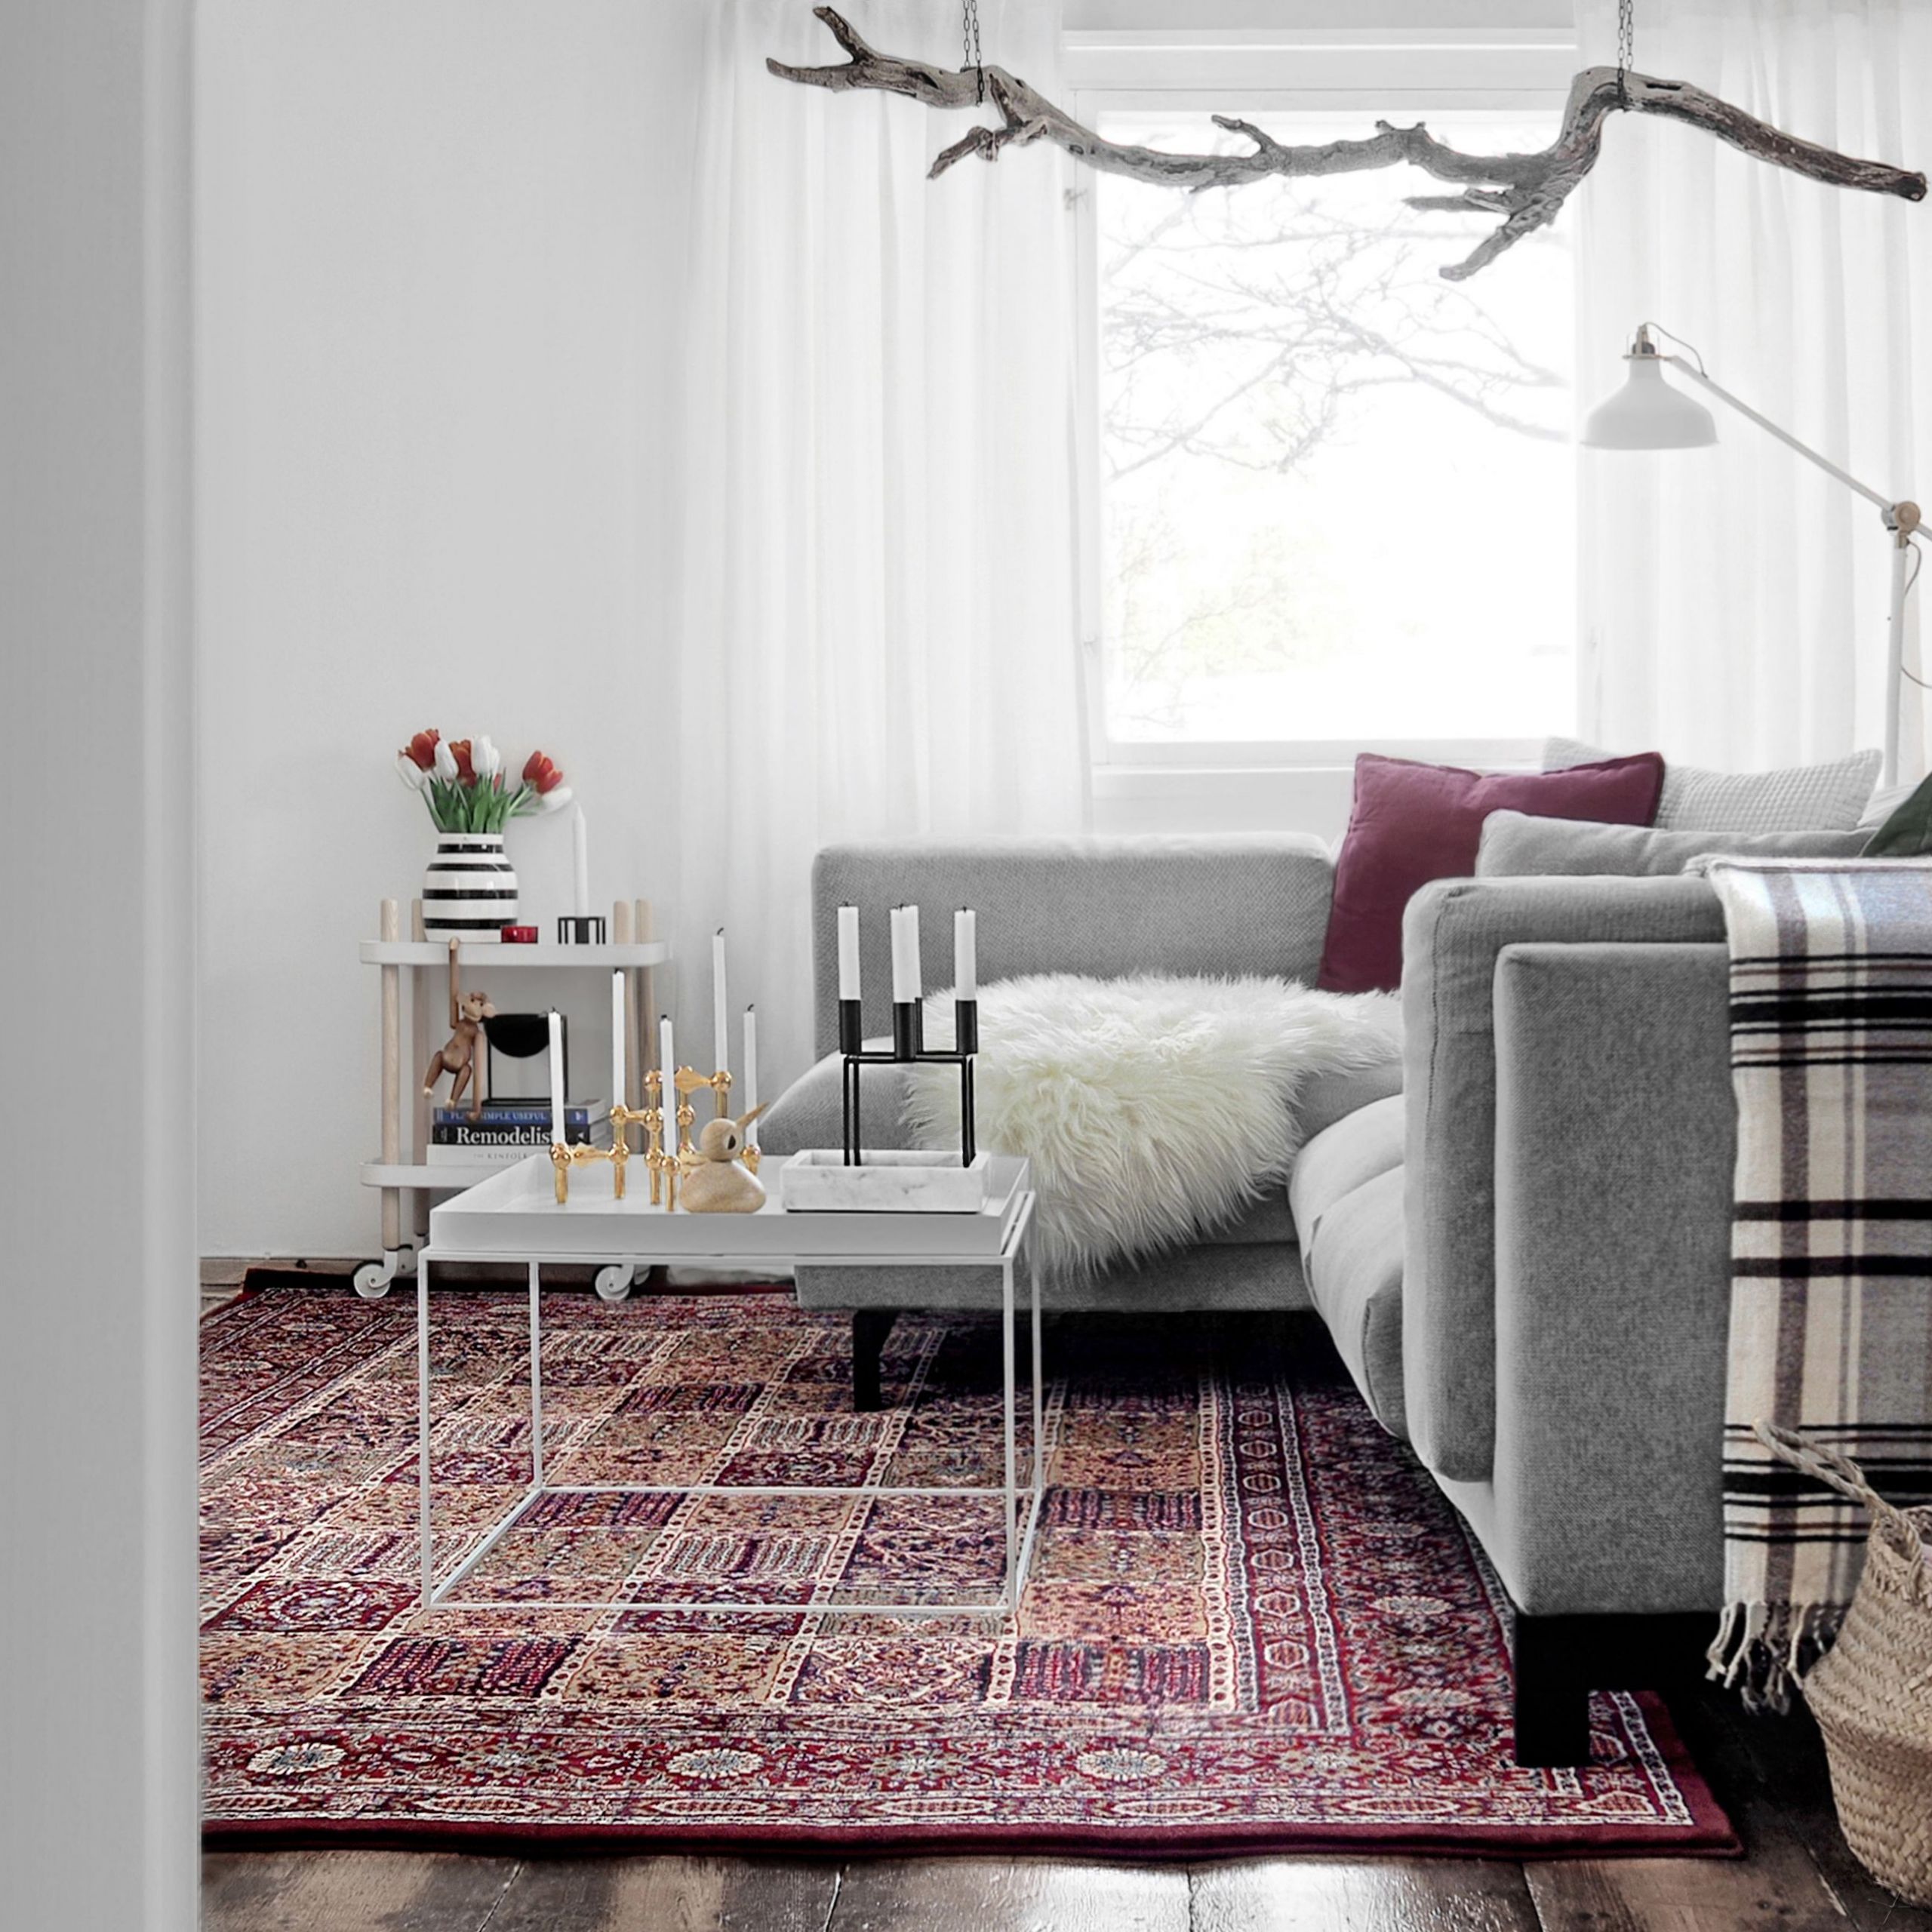 Living Room Rugs Ikea
 Our livingroom ️ The carpet is Ikea s Valby ruta